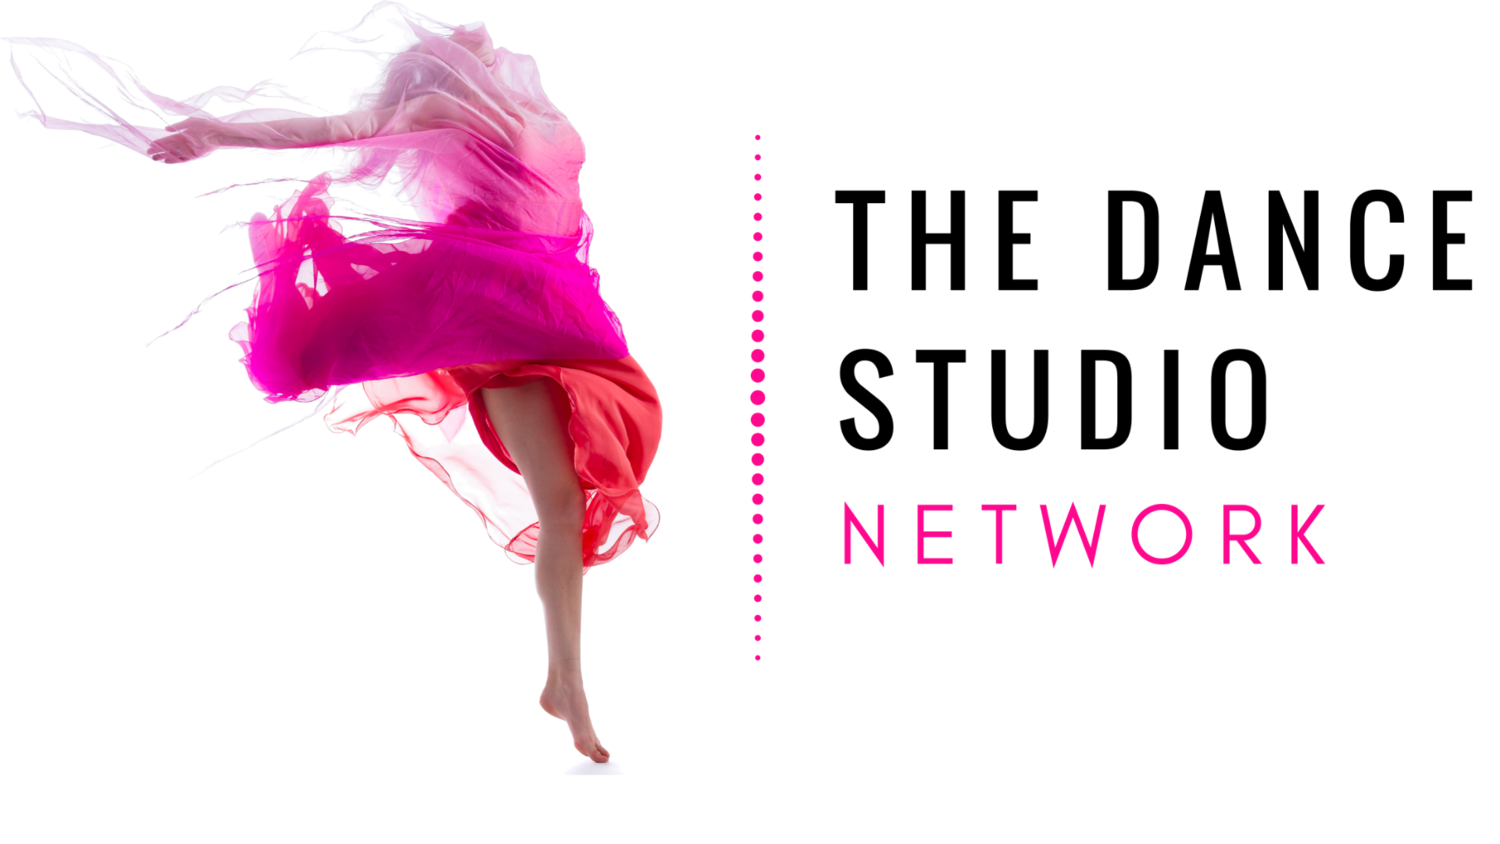 The Dance Studio Network